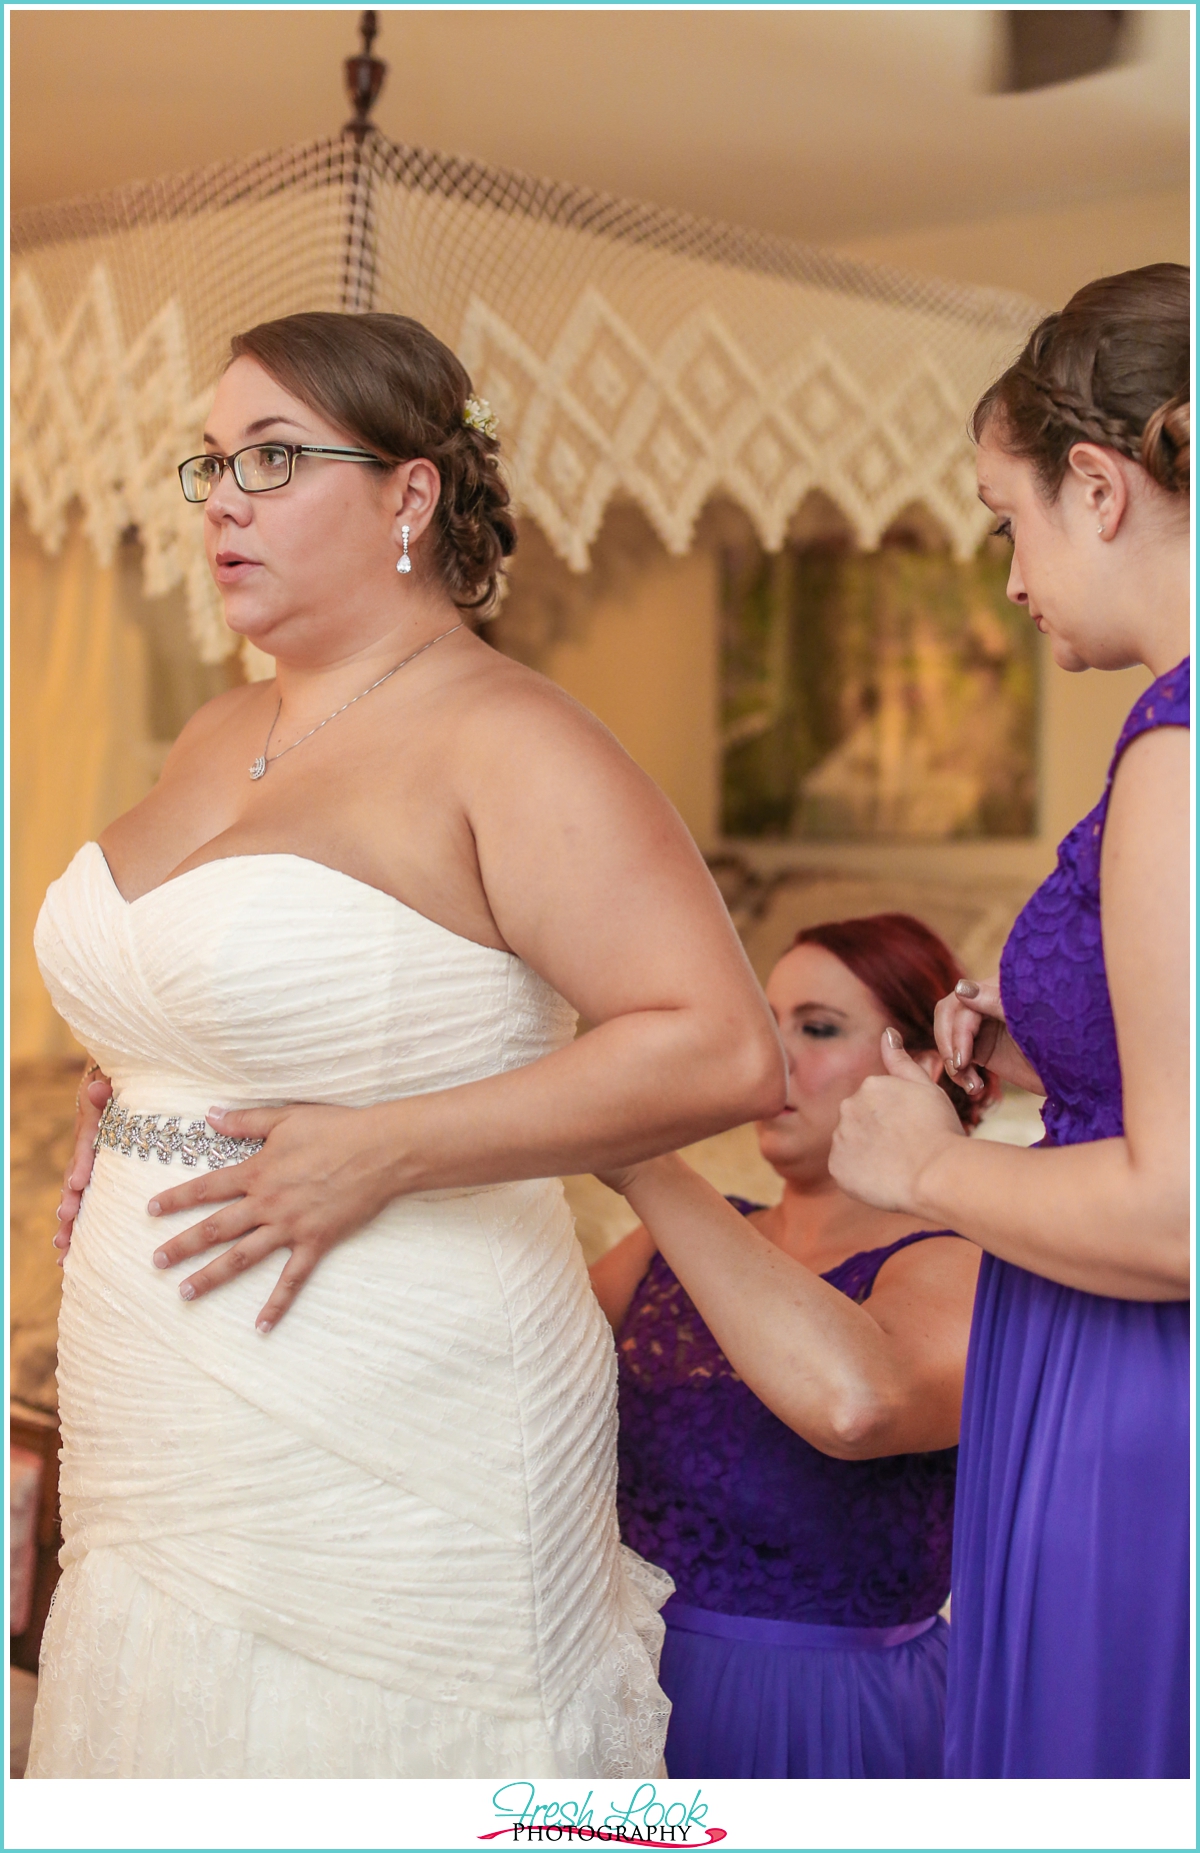 putting on the wedding dress